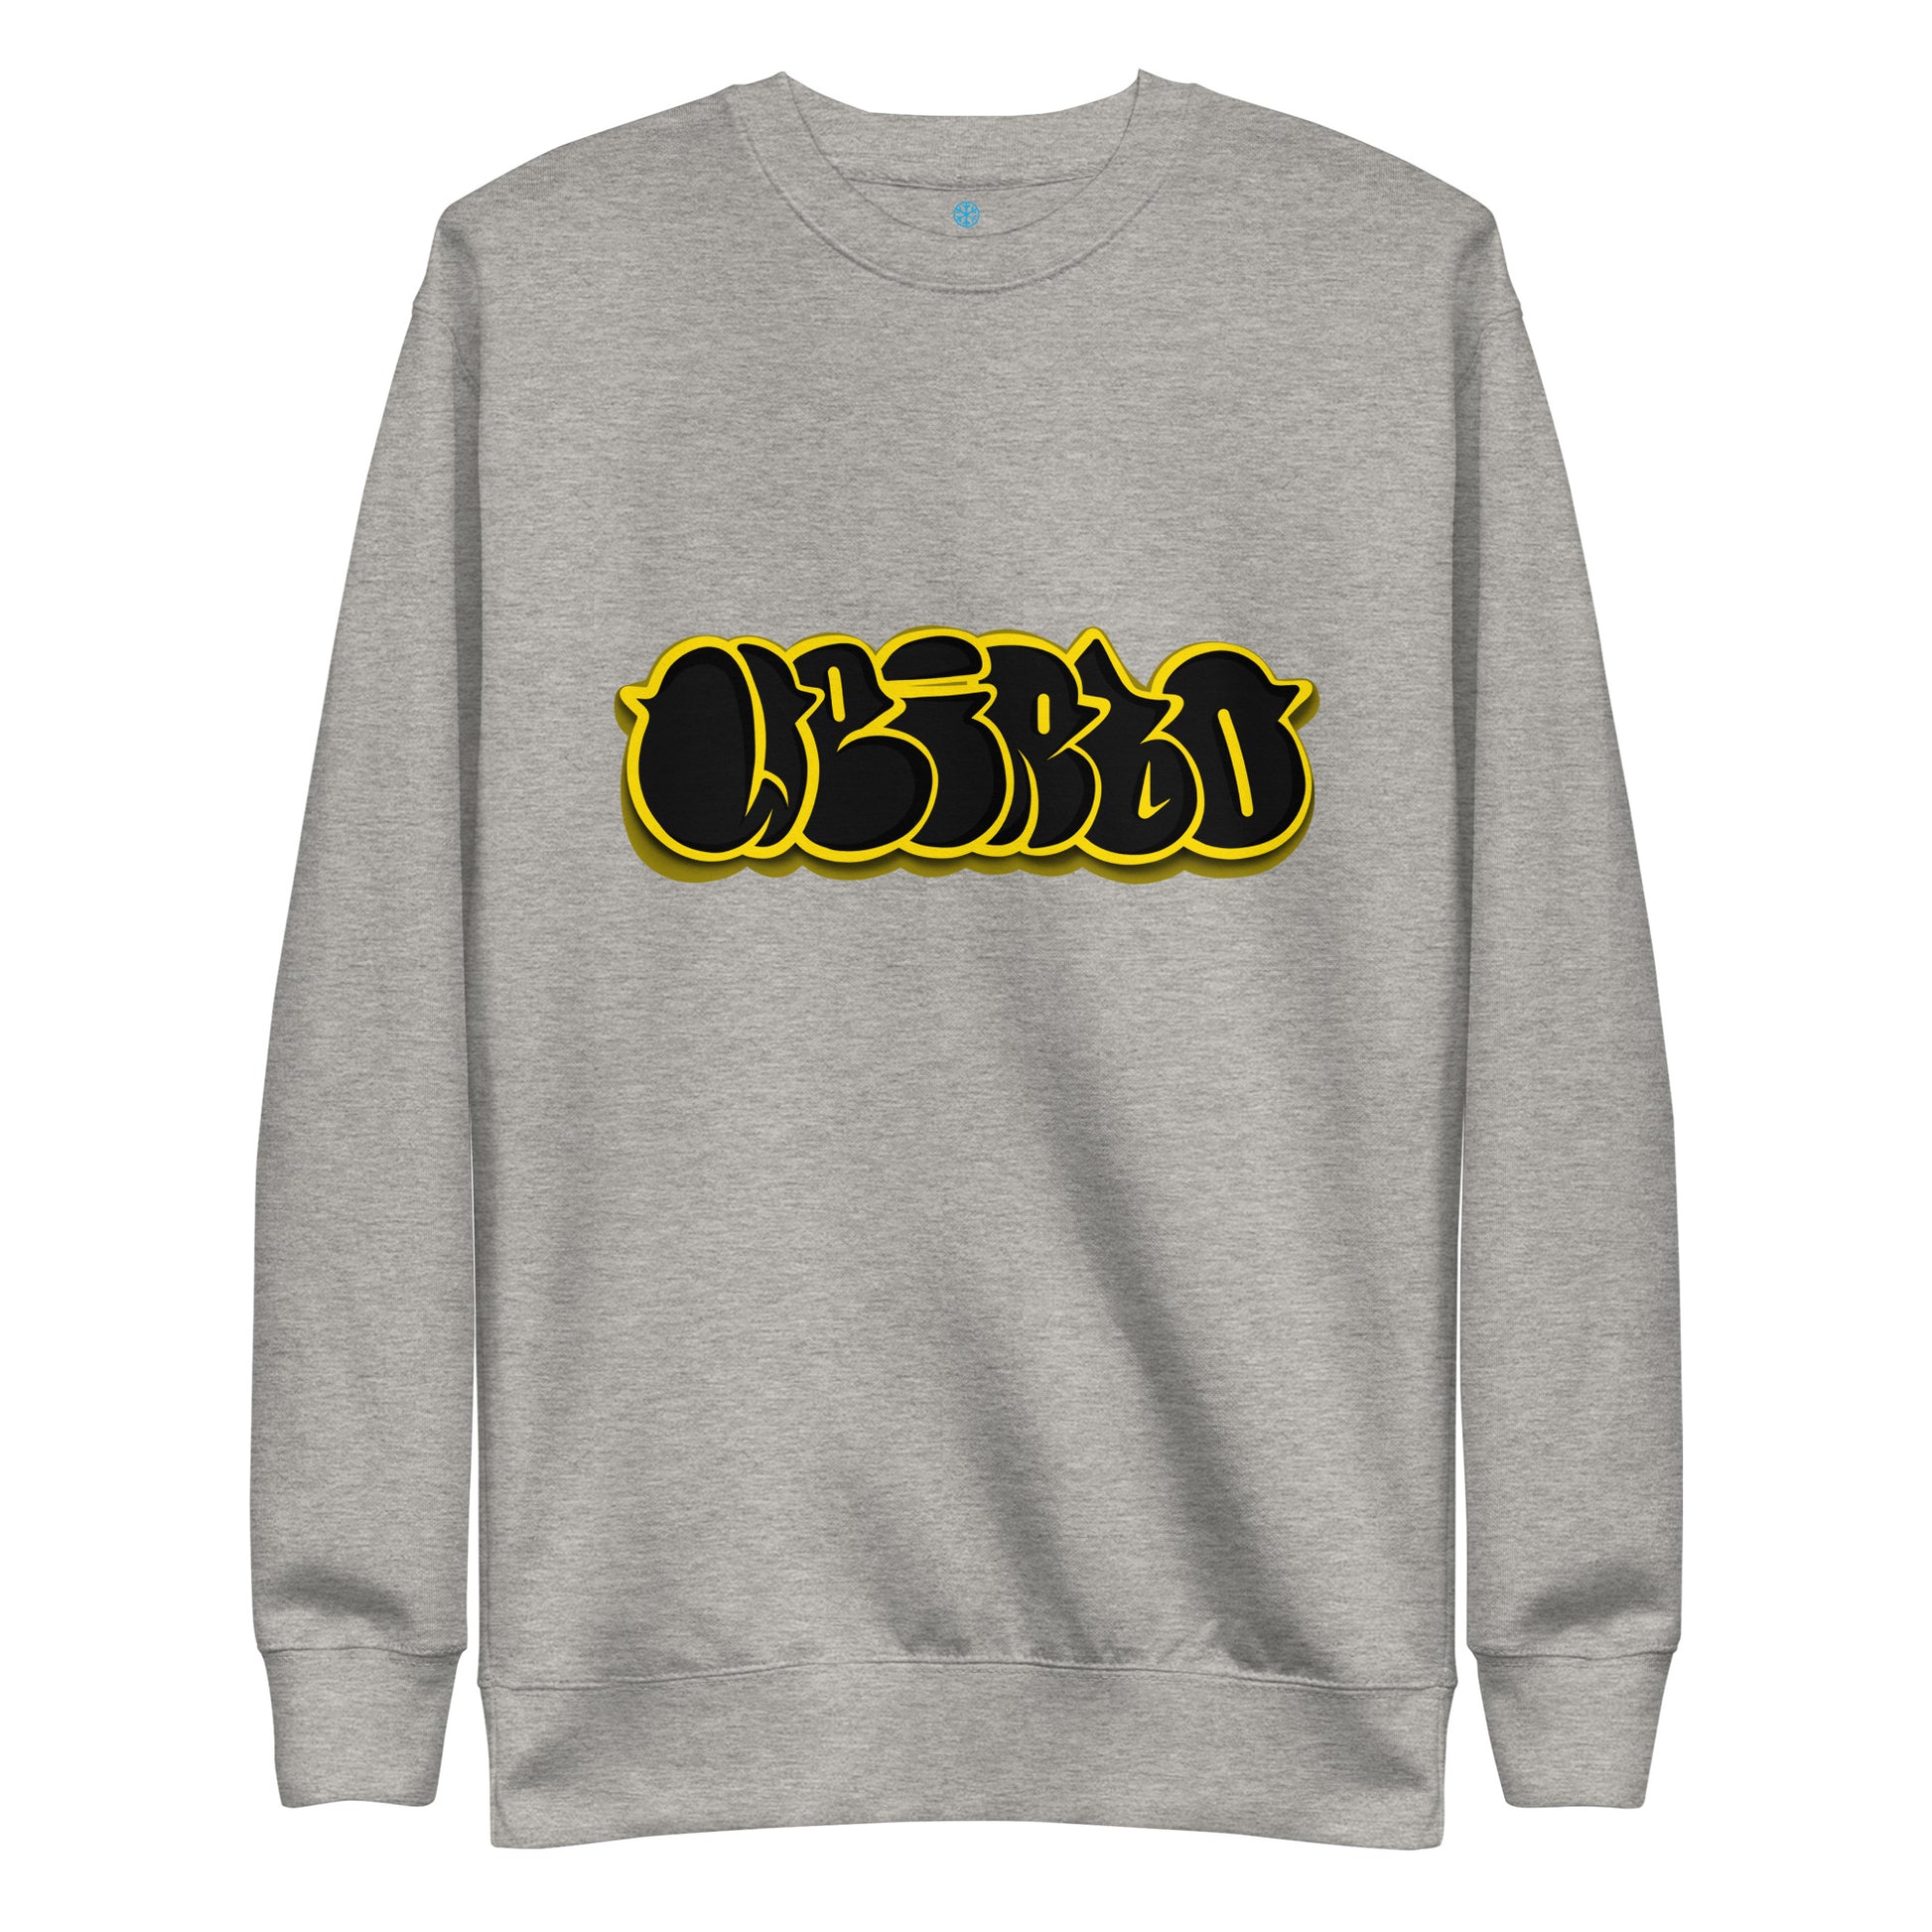 Weirdo Throwie Sweatshirt by B.Different Clothing street art graffiti inspired streetwear brand